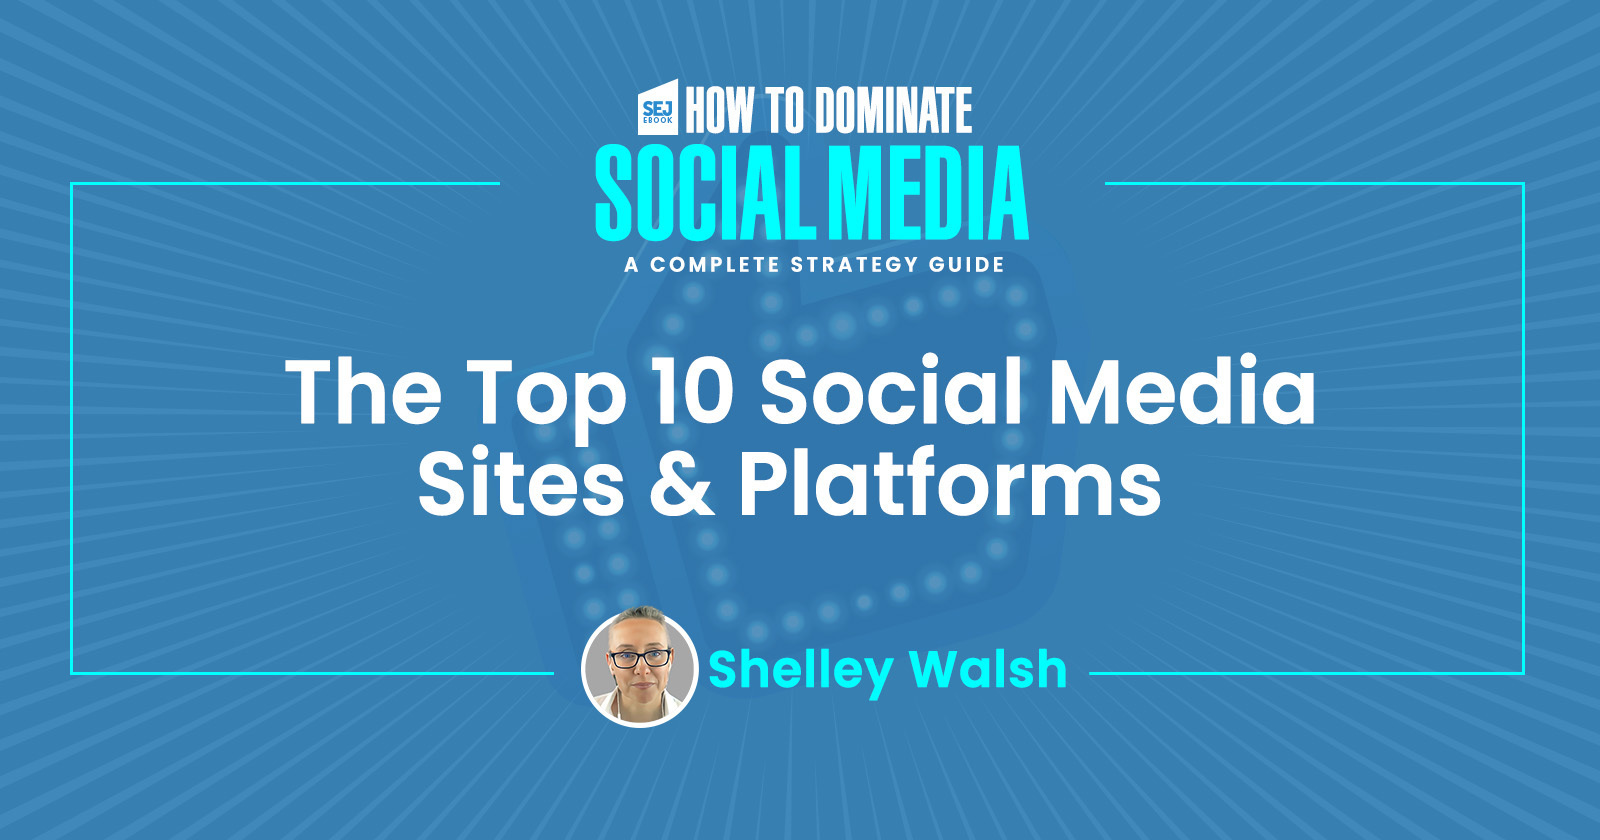 The Top 10 Social Media Sites & Platforms 2022 via @sejournal, @theshelleywalsh